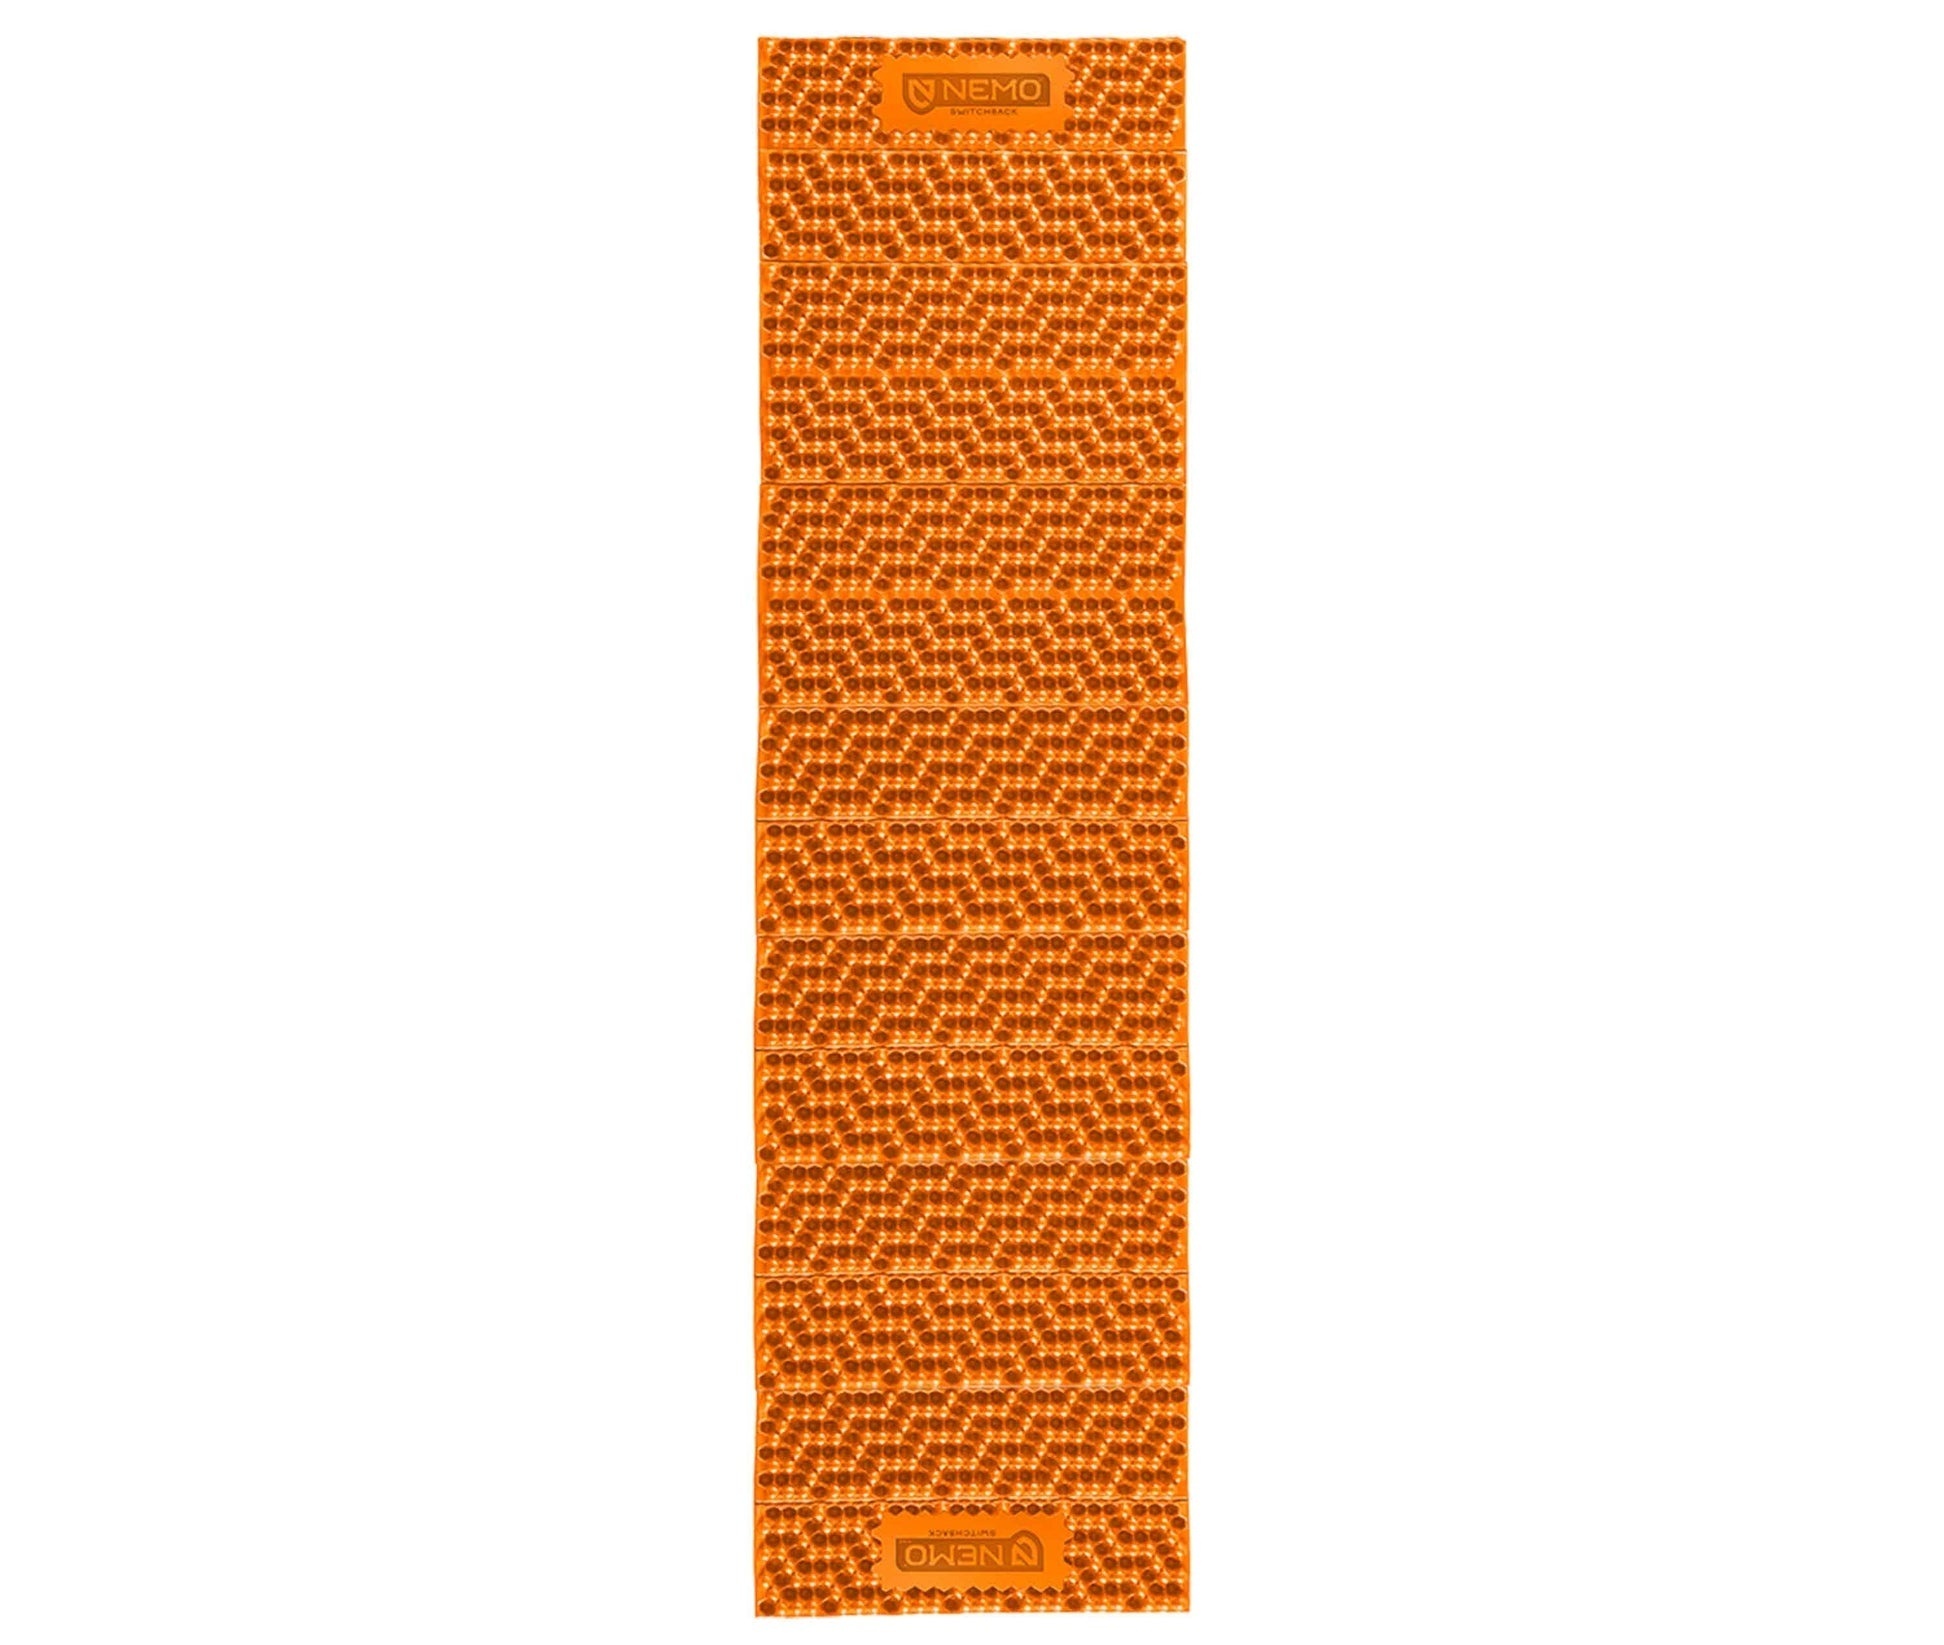 Switchback Regular Foam Slaapmat (Sunset Orange)